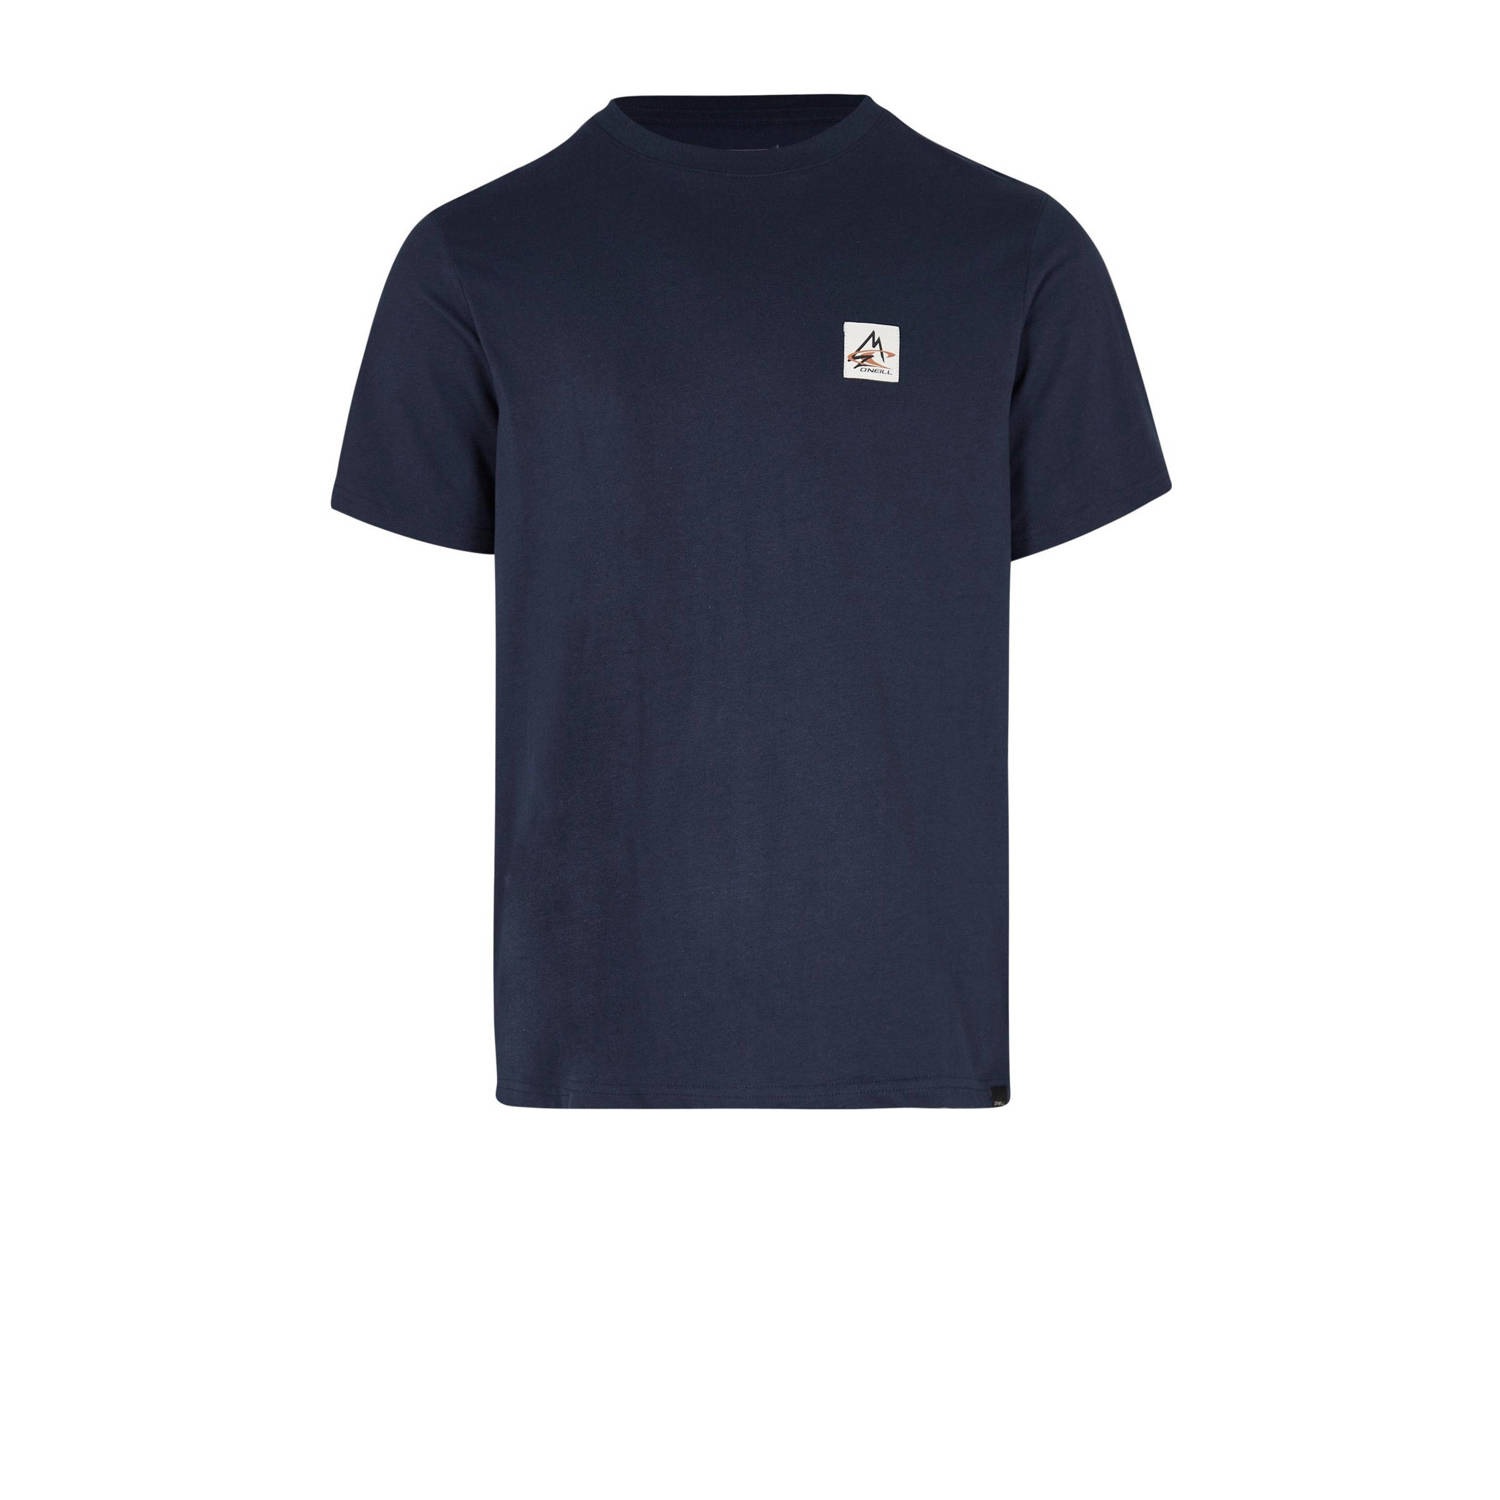 O'Neill T-shirt met logo marine